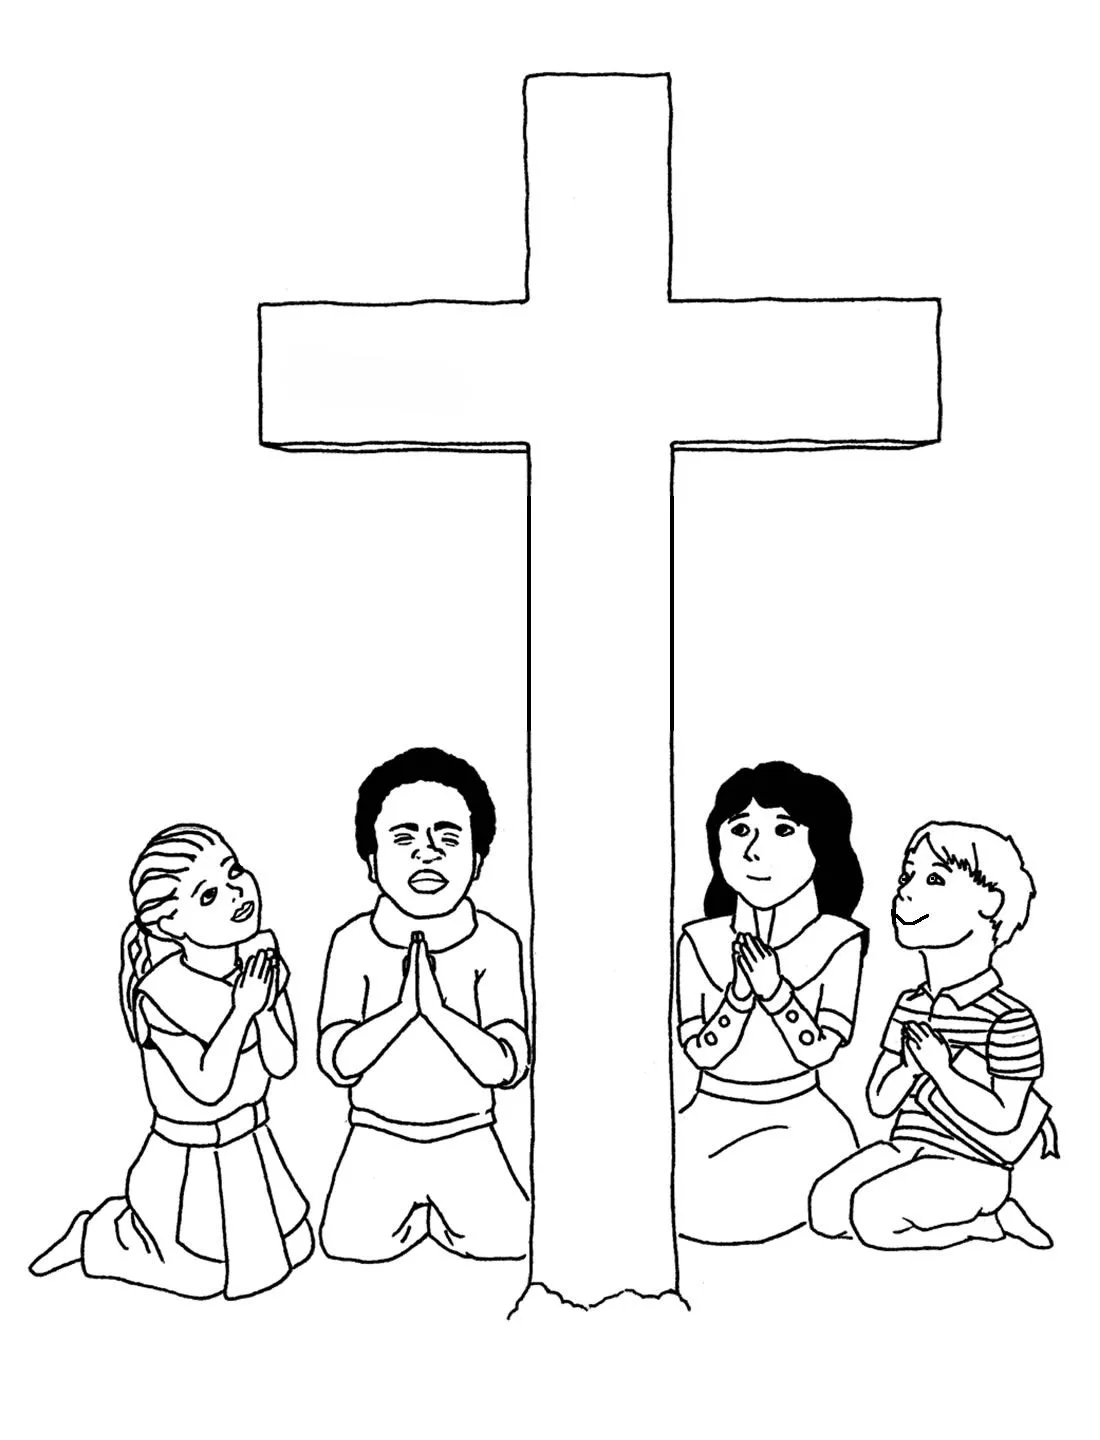 Dibujos de familias orando - Imagui